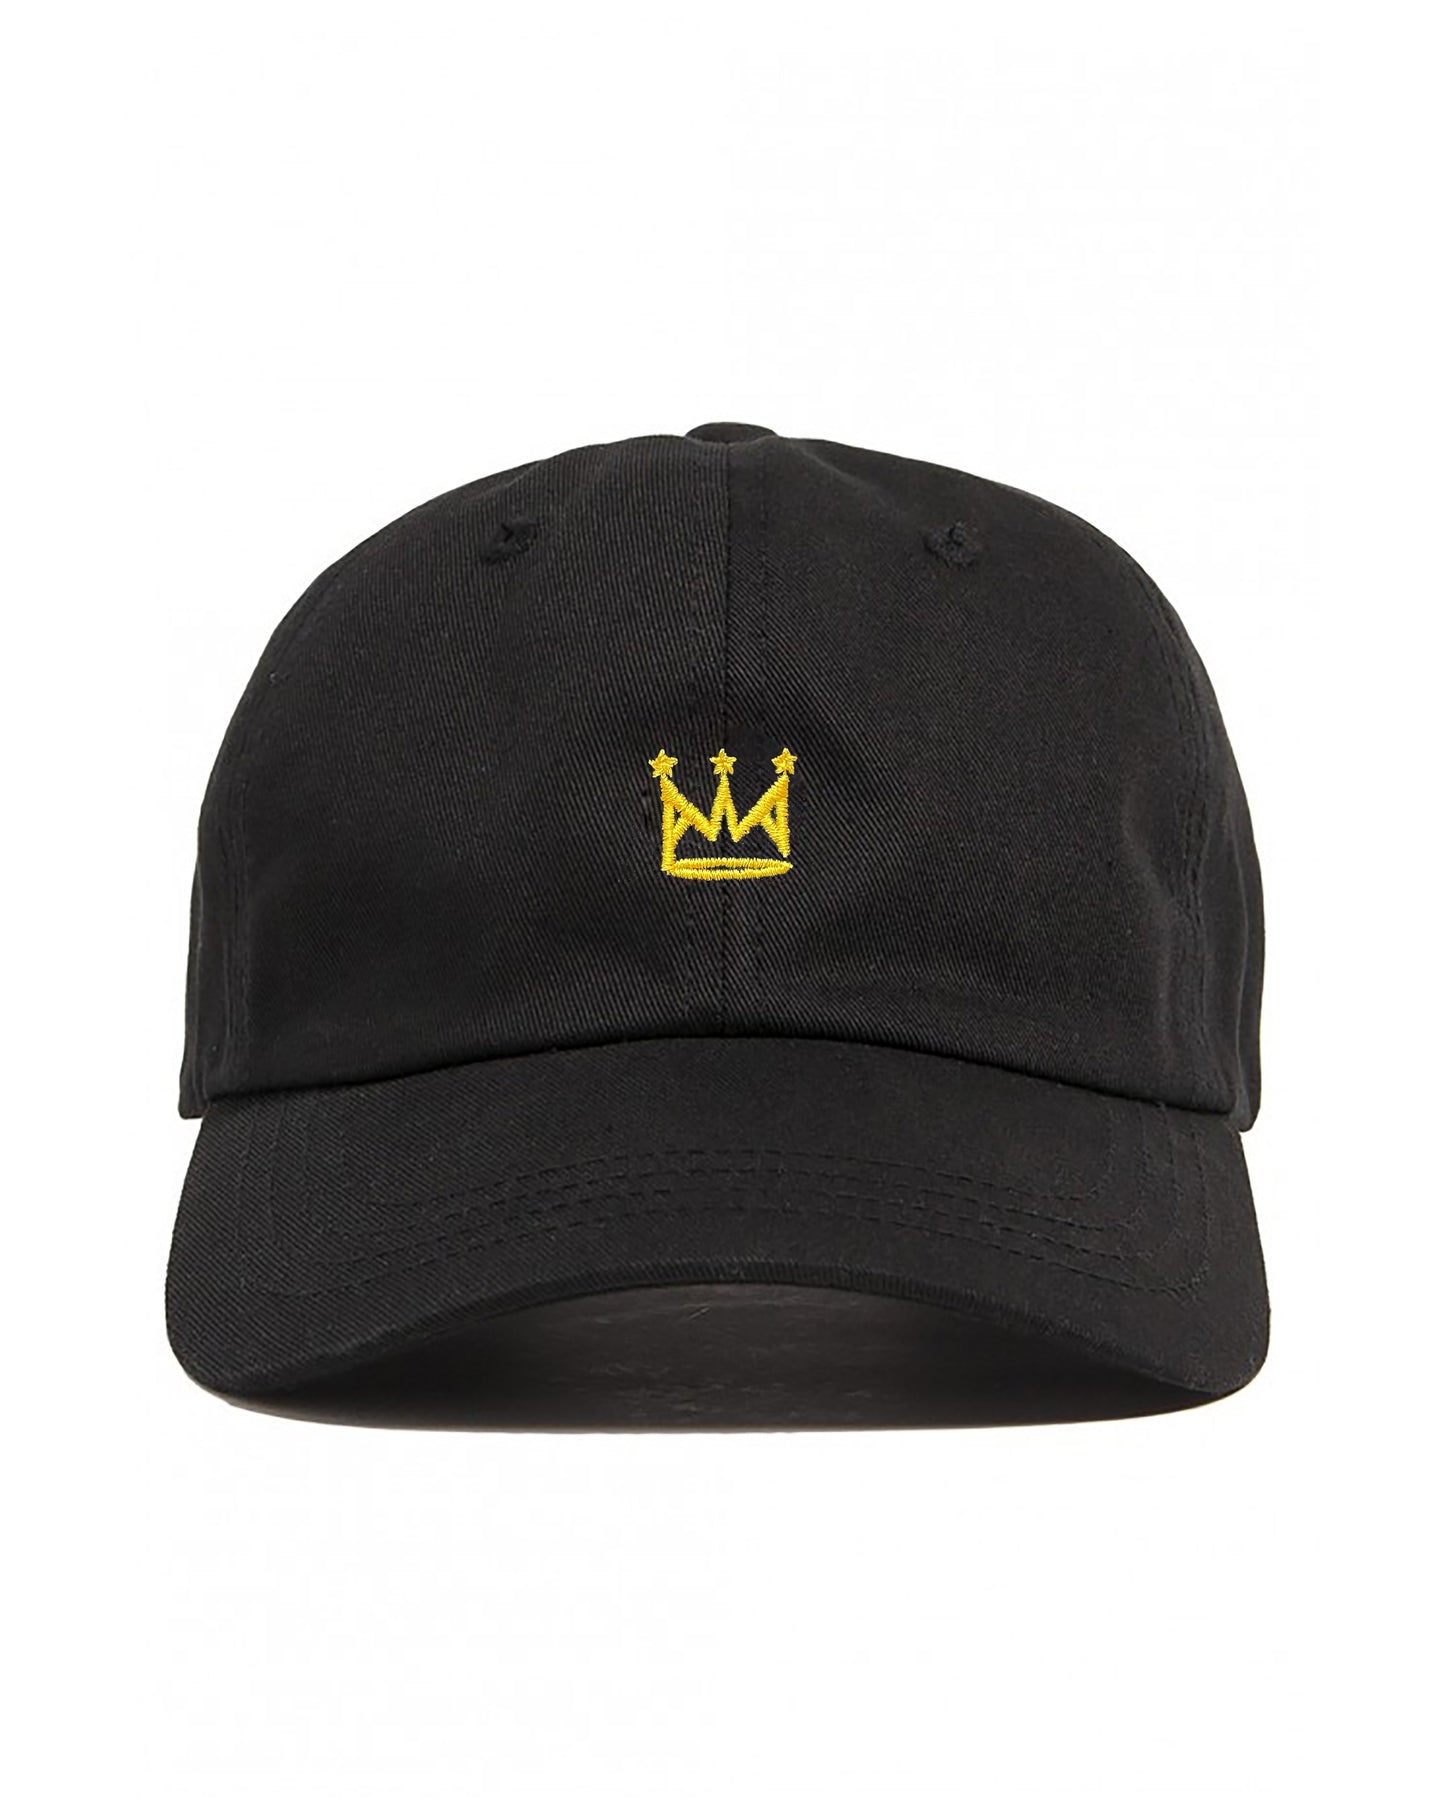 Crown Dad Hat in Black/Gold